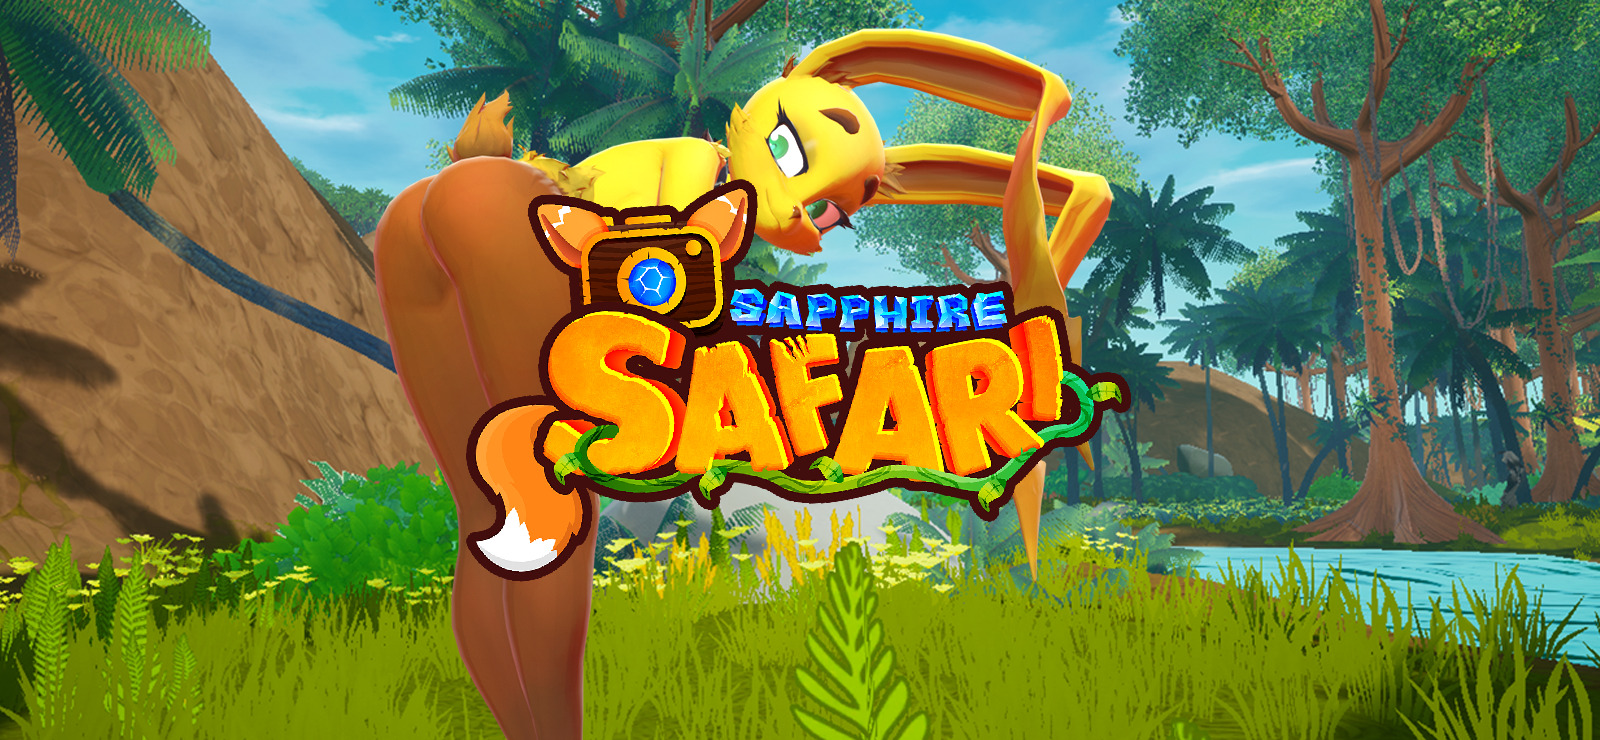 safa safari game